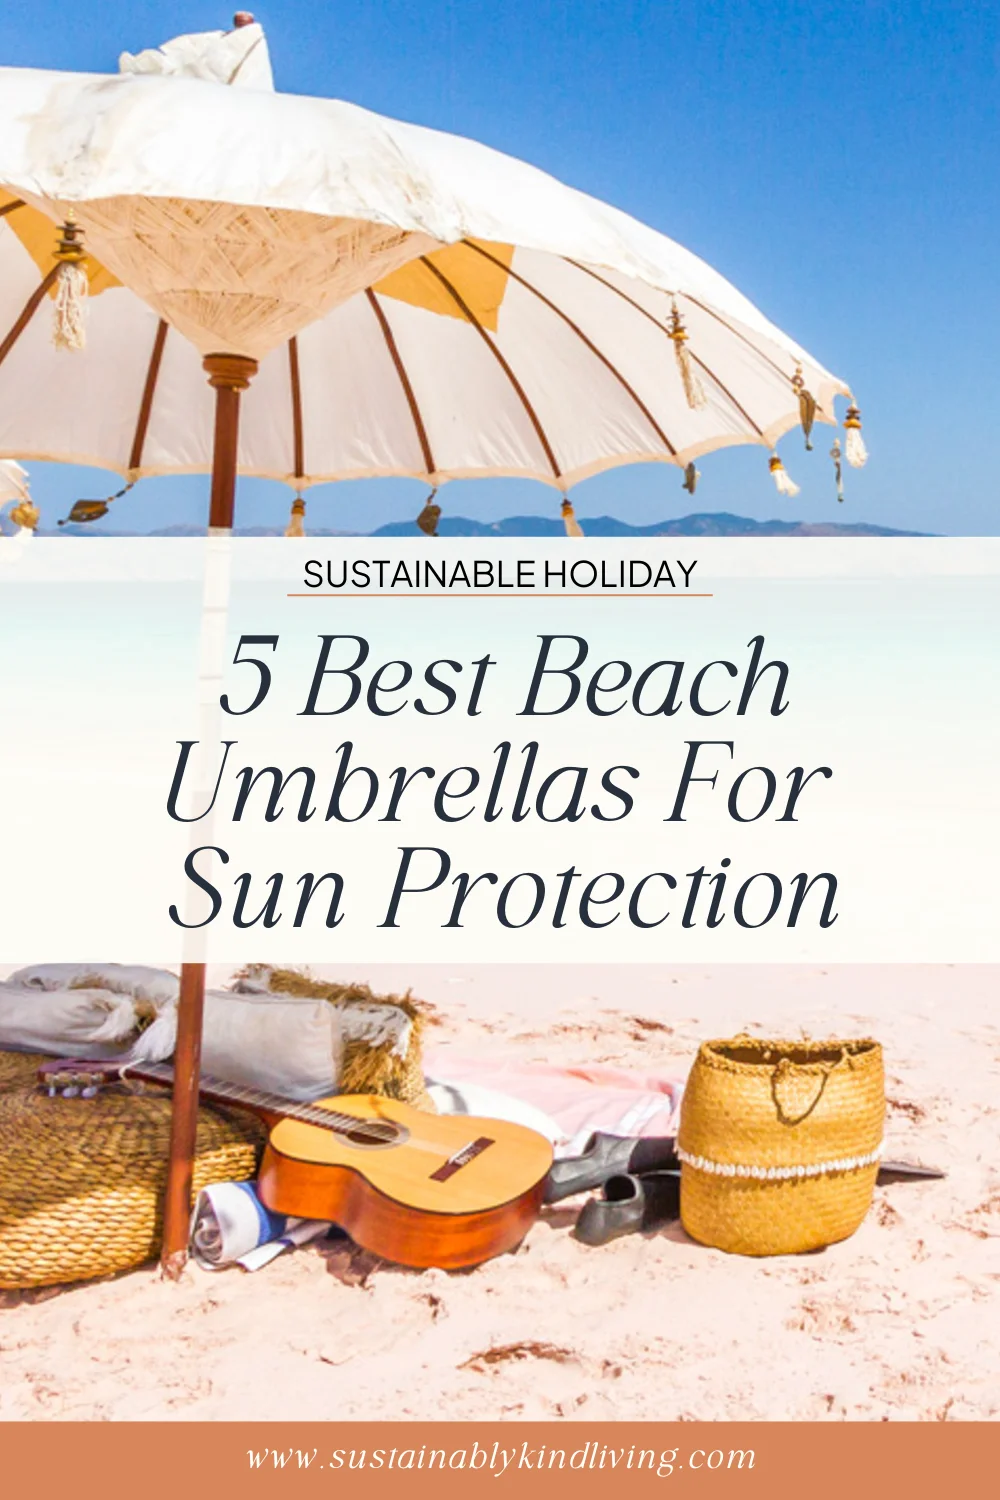 5 Best Sustainable Beach Umbrellas For UVA/UVB Sun Protection